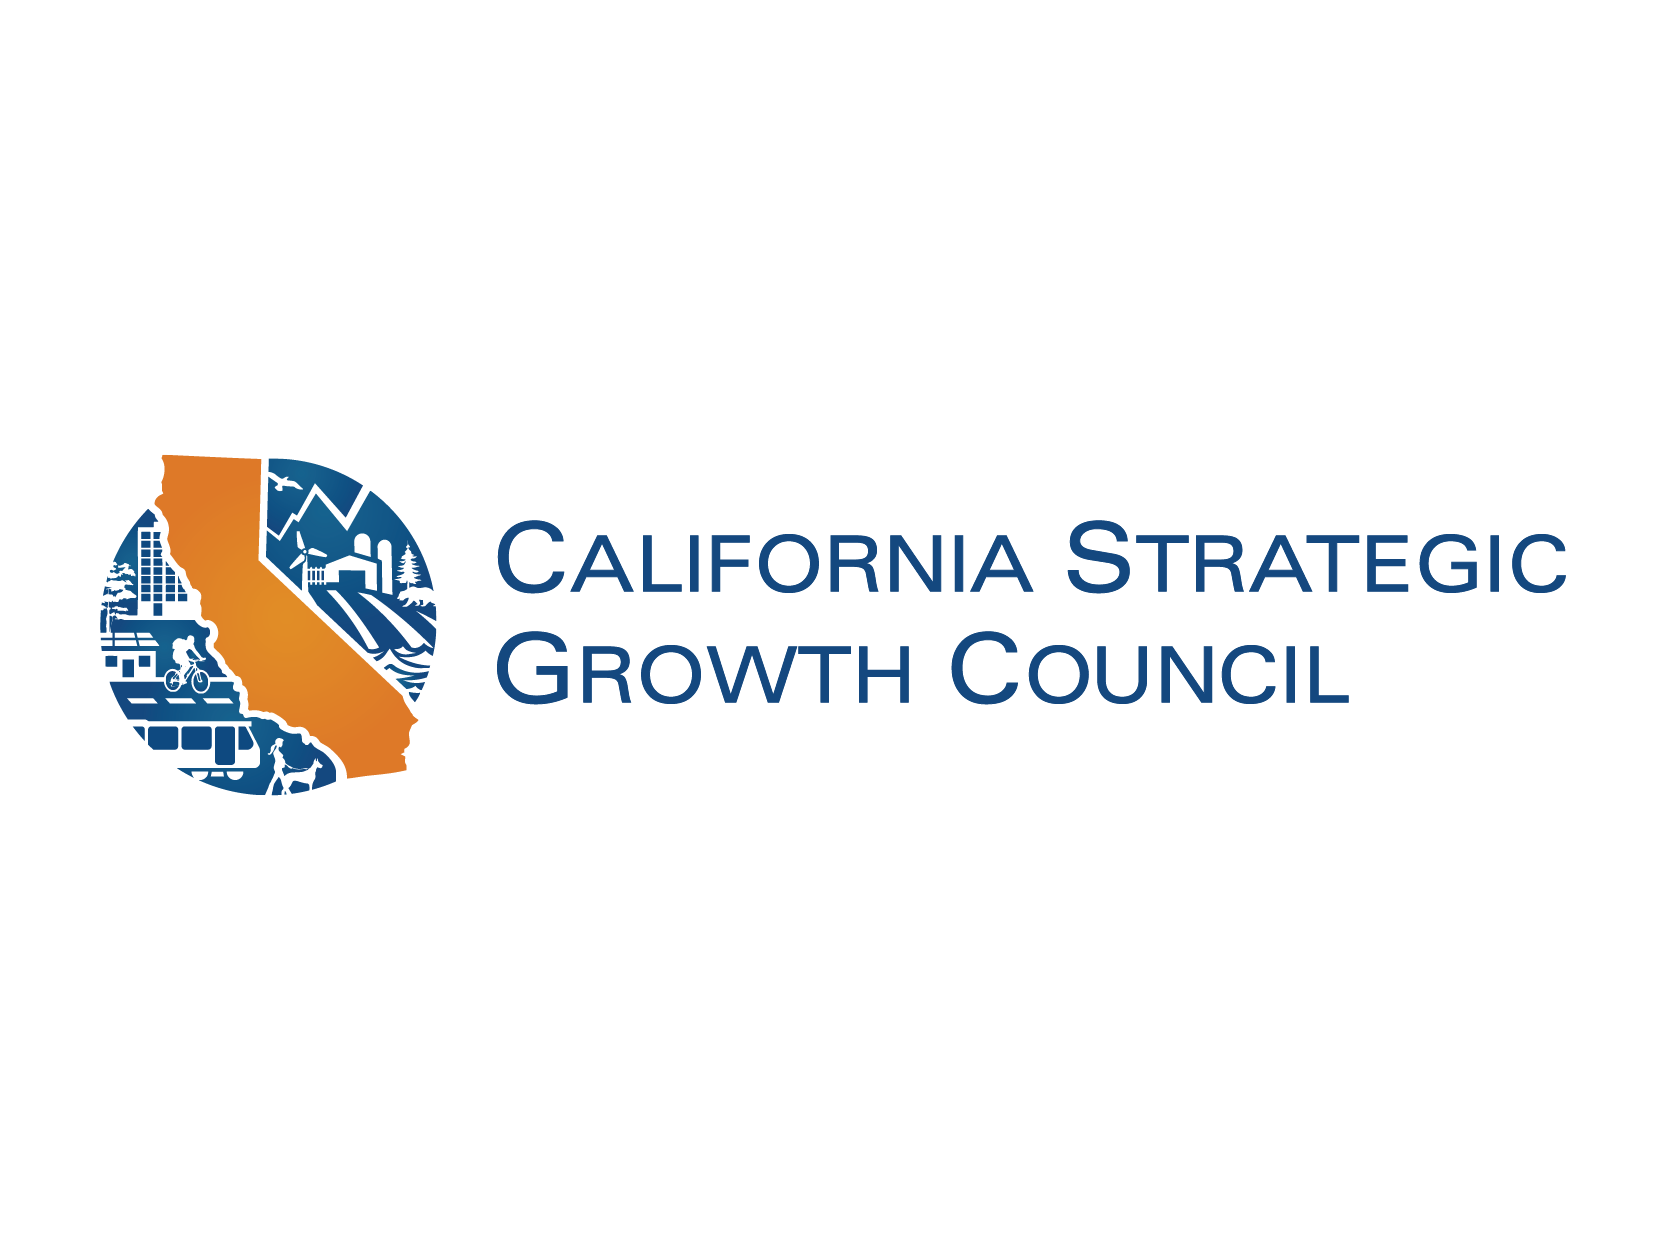 Strategic Growth Council